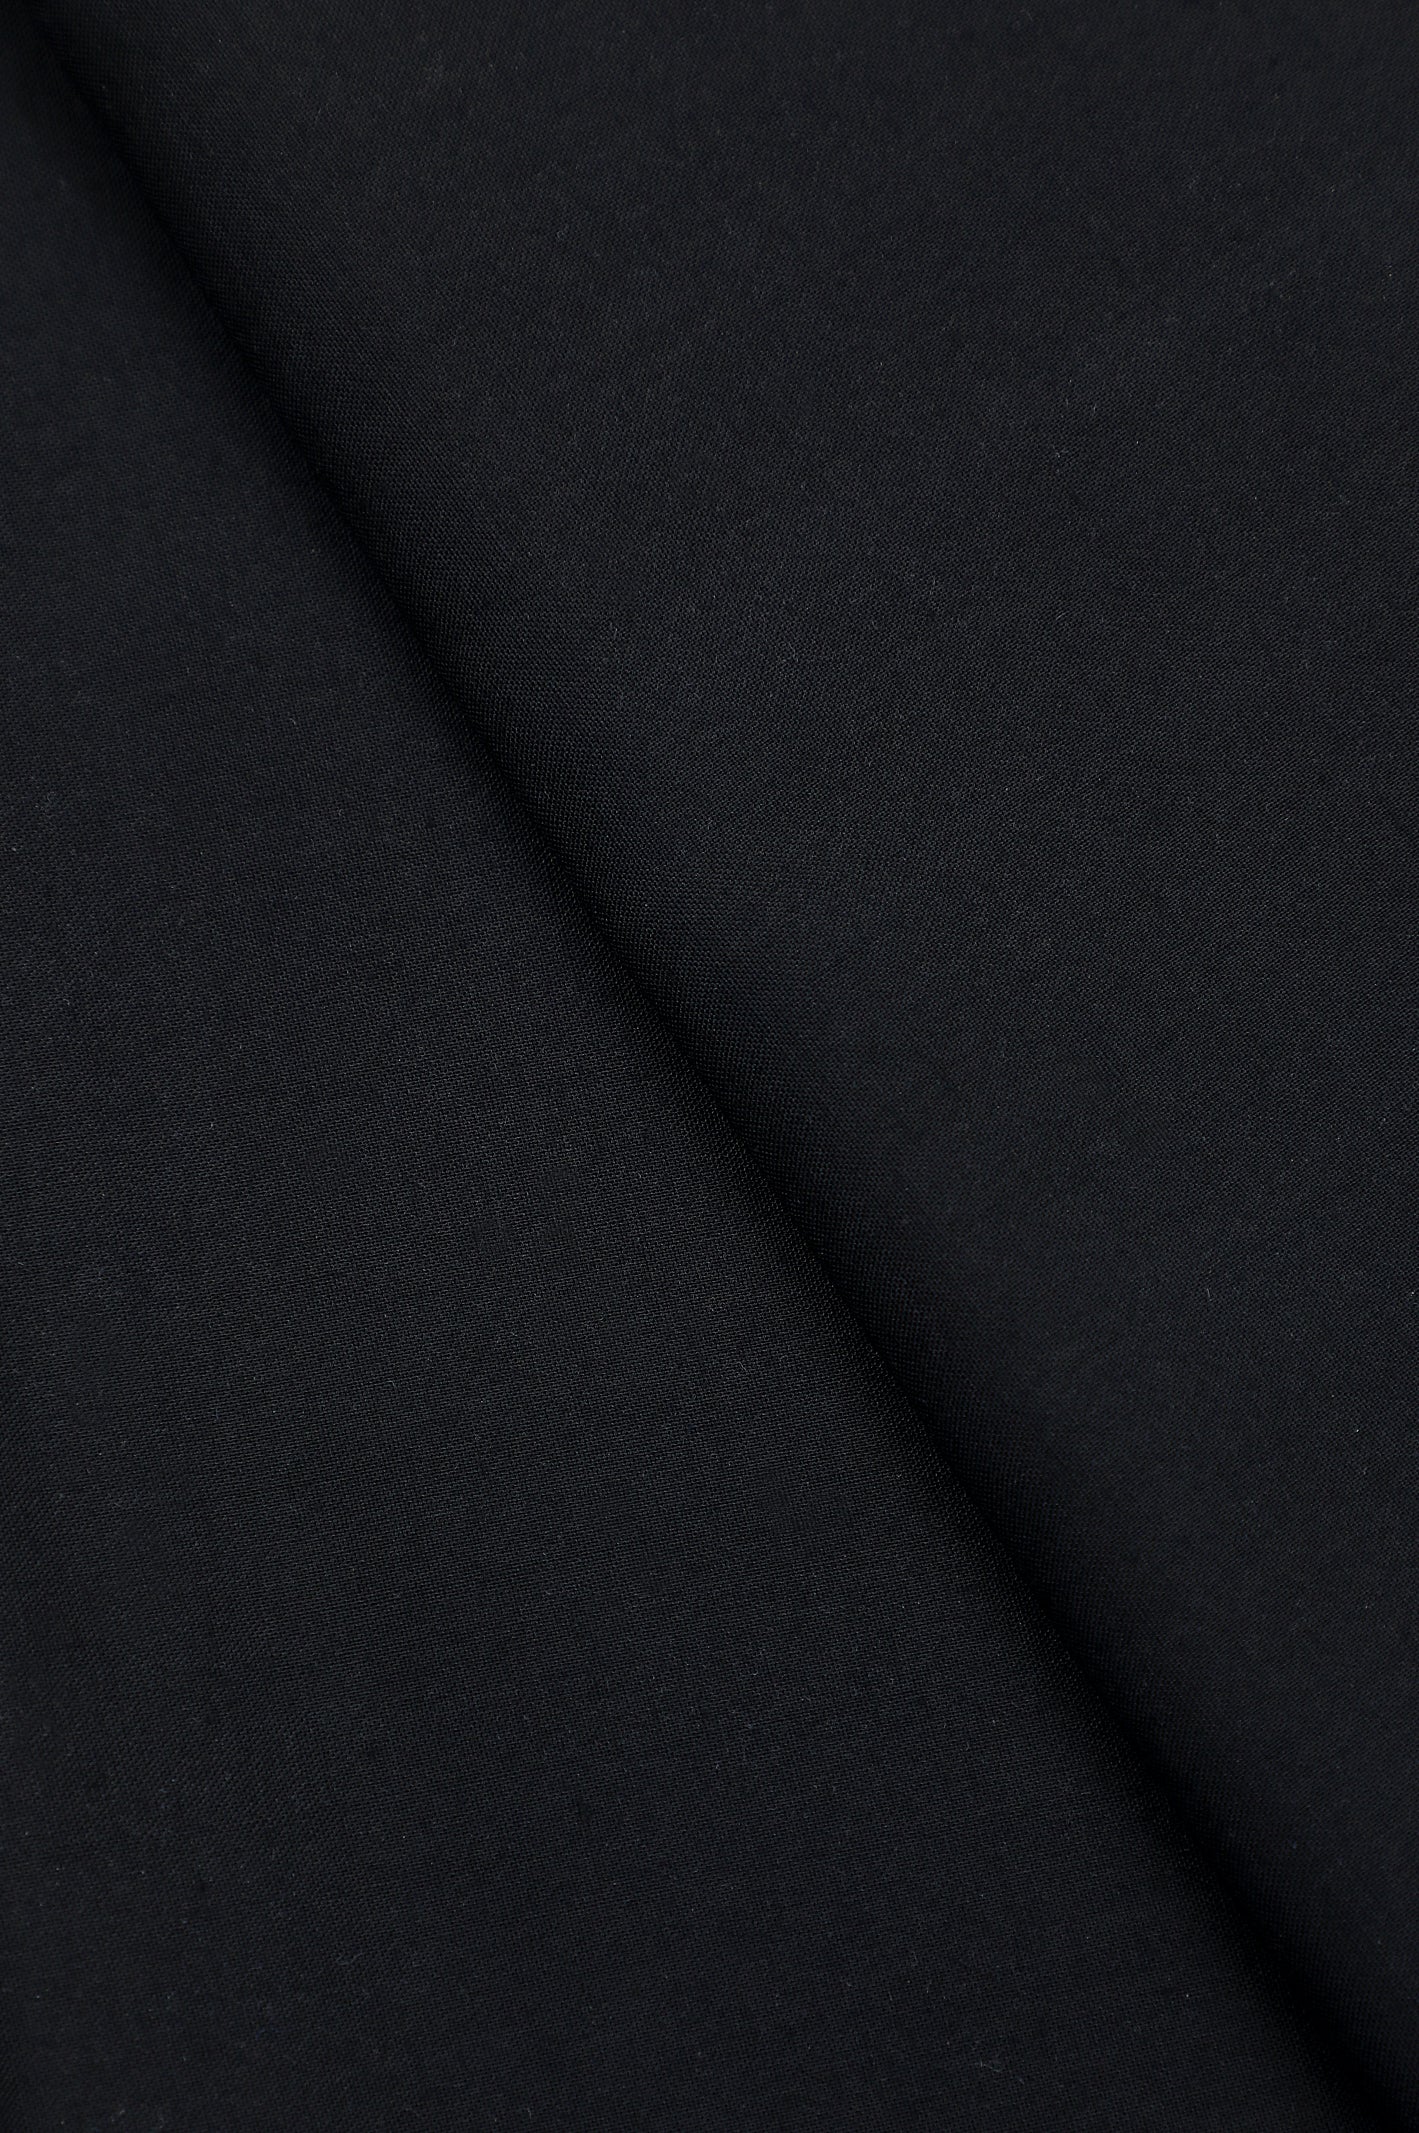 Unstitched Fabric for Men SKU: US0186-BLACK - Diners